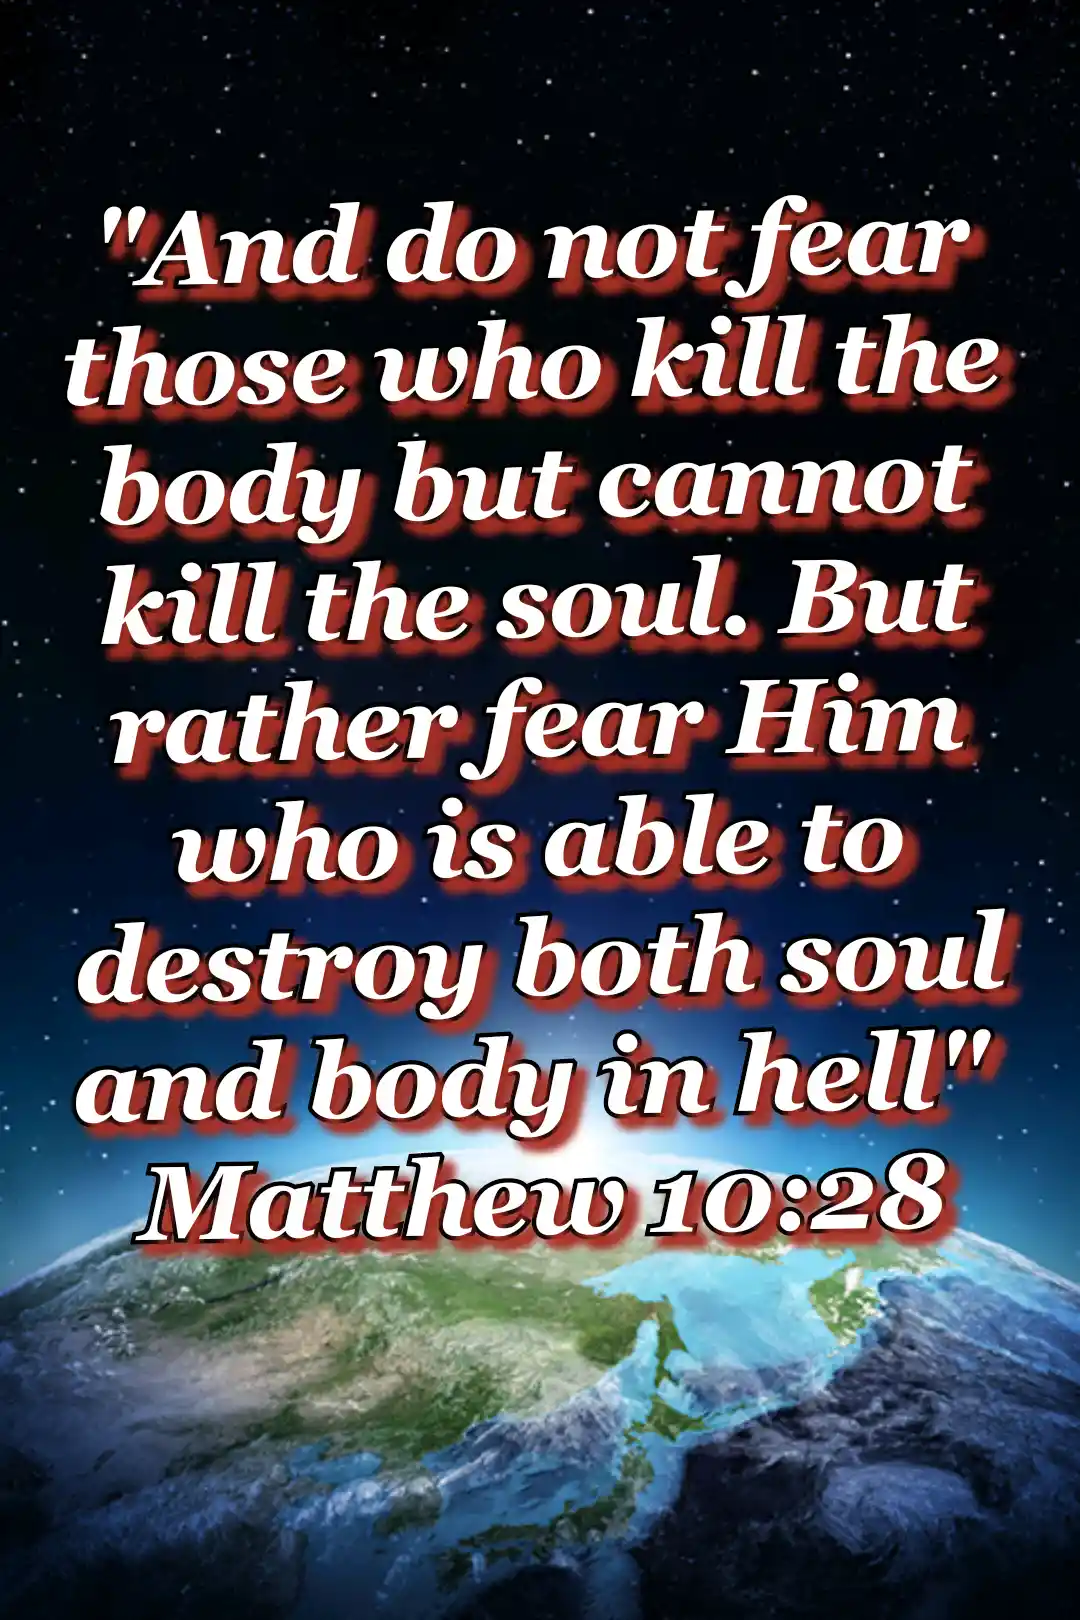 Bible-Verses_about_death-Image (Matthew 10:28)